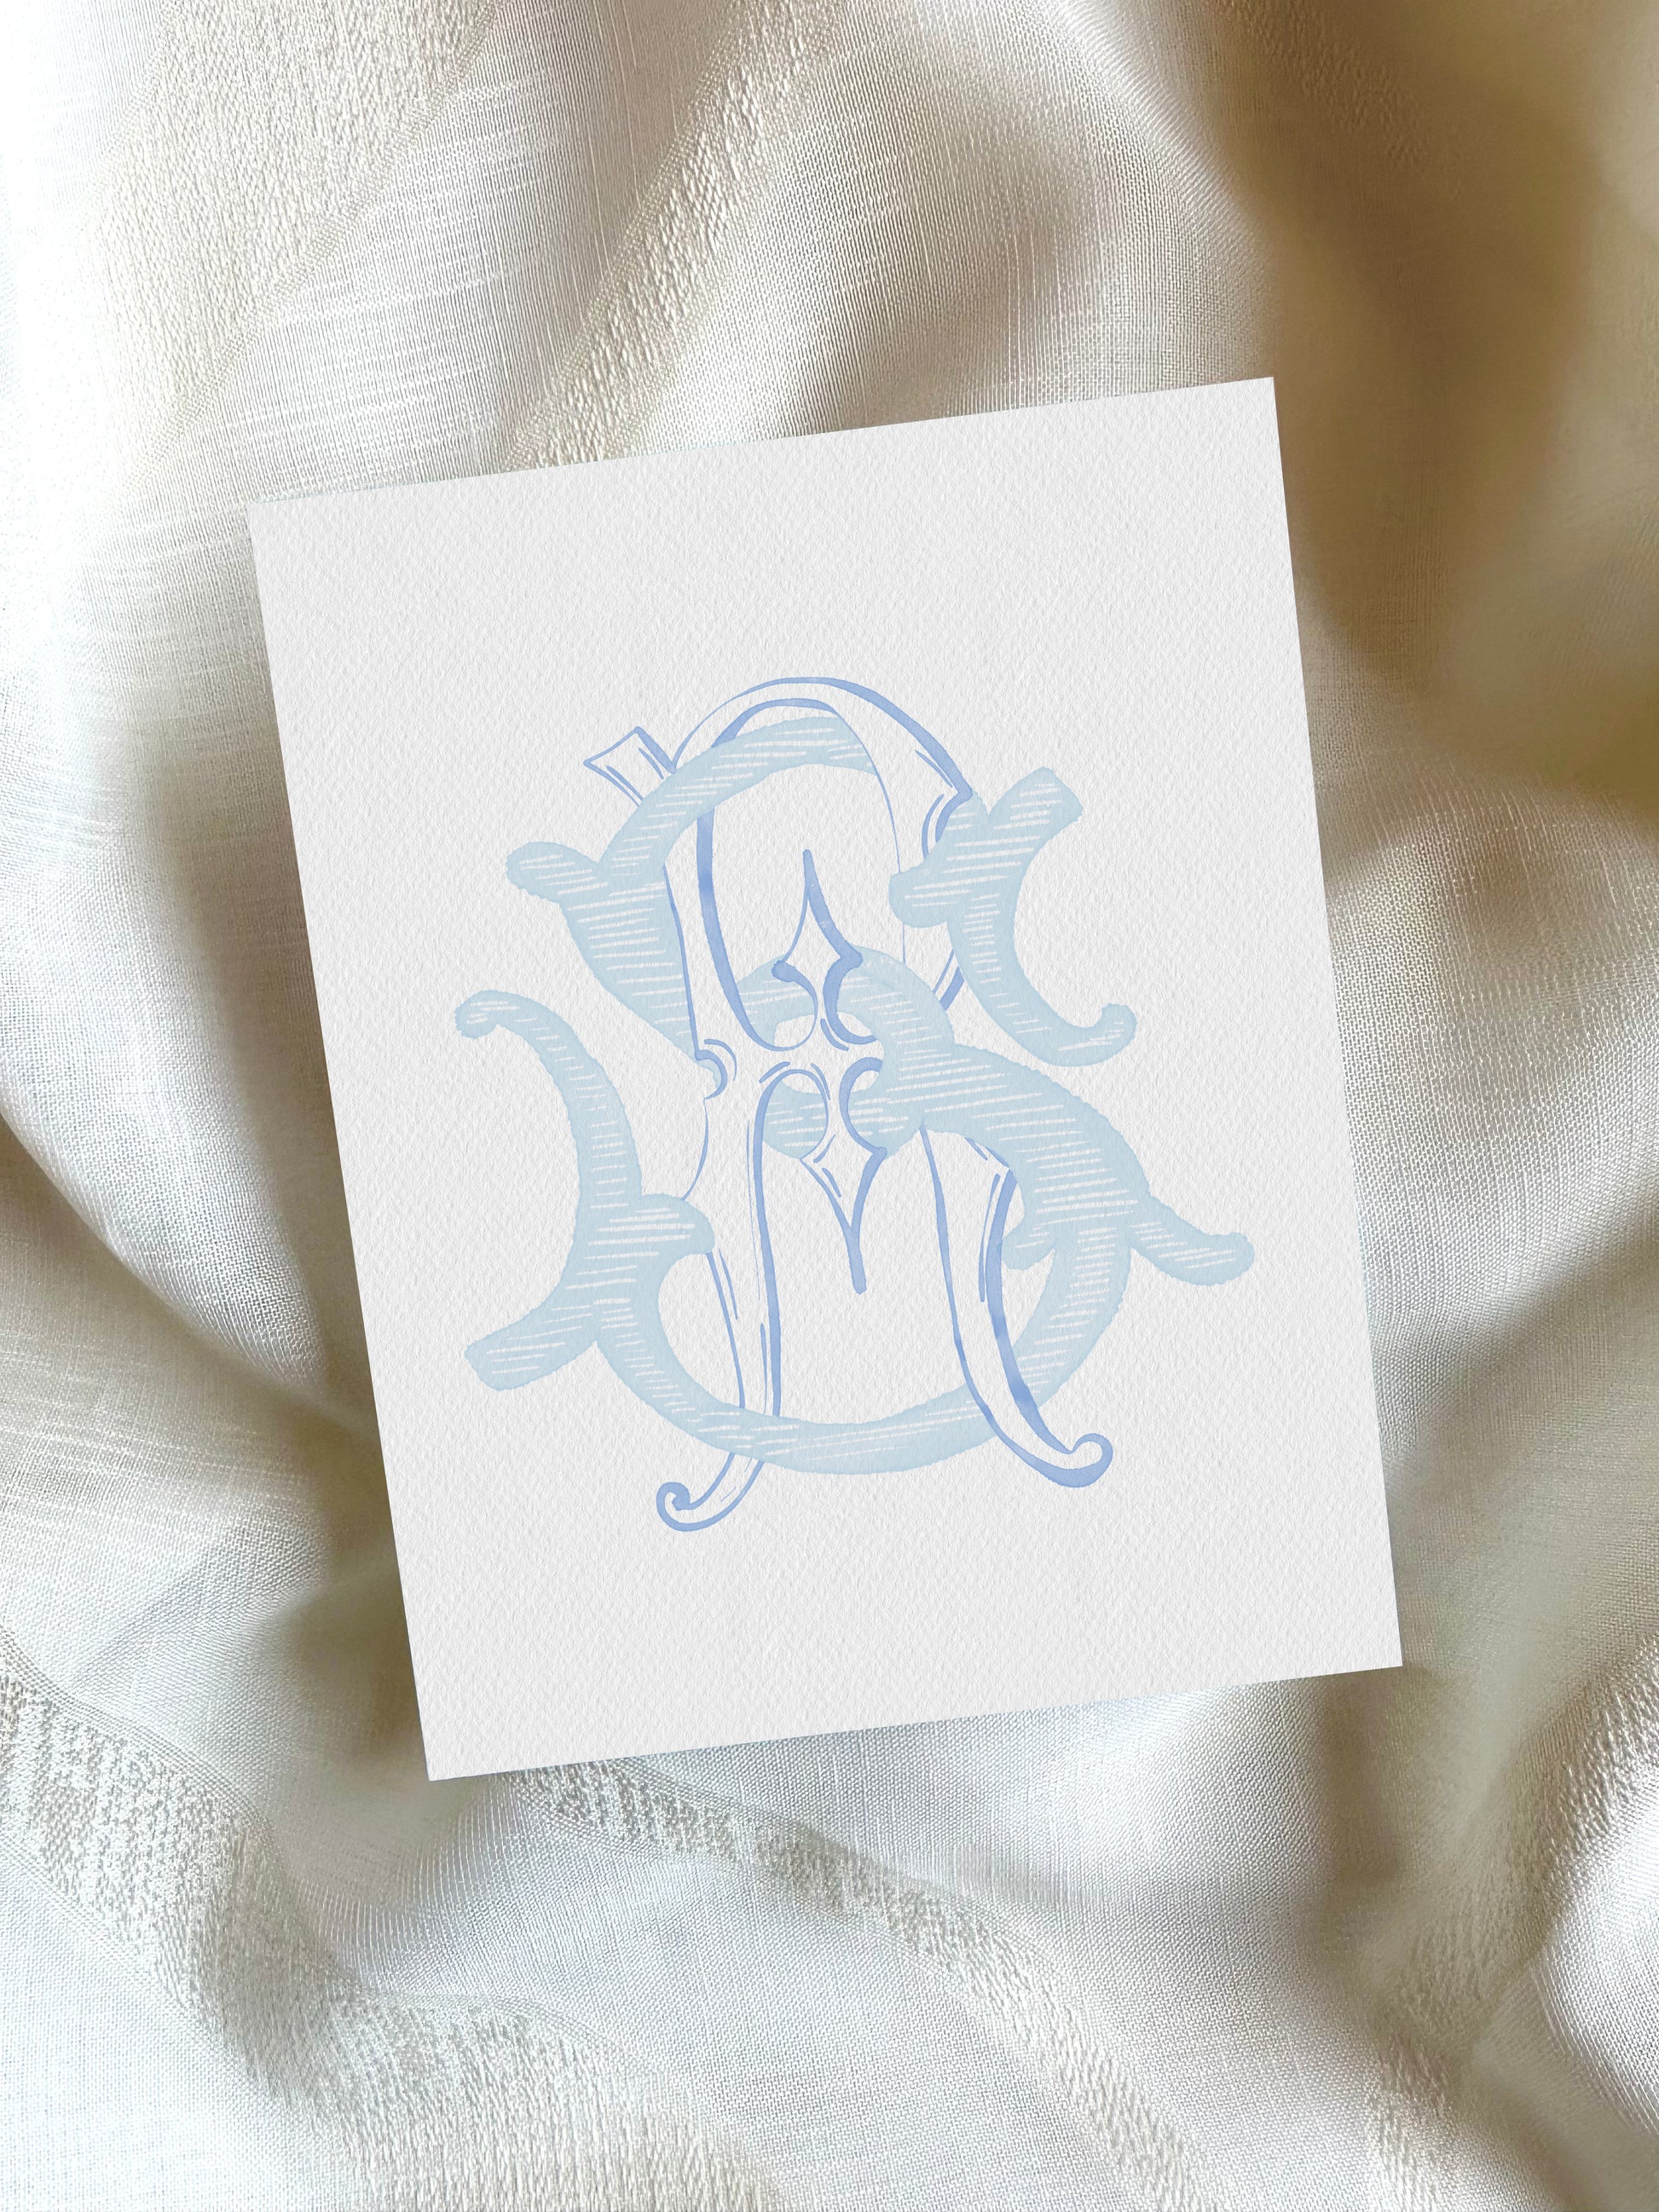 2 Letter Monogram with Letters SR RS | Digital Download - Wedding Monogram SVG, Personal Logo, Wedding Logo for Wedding Invitations The Wedding Crest Lab